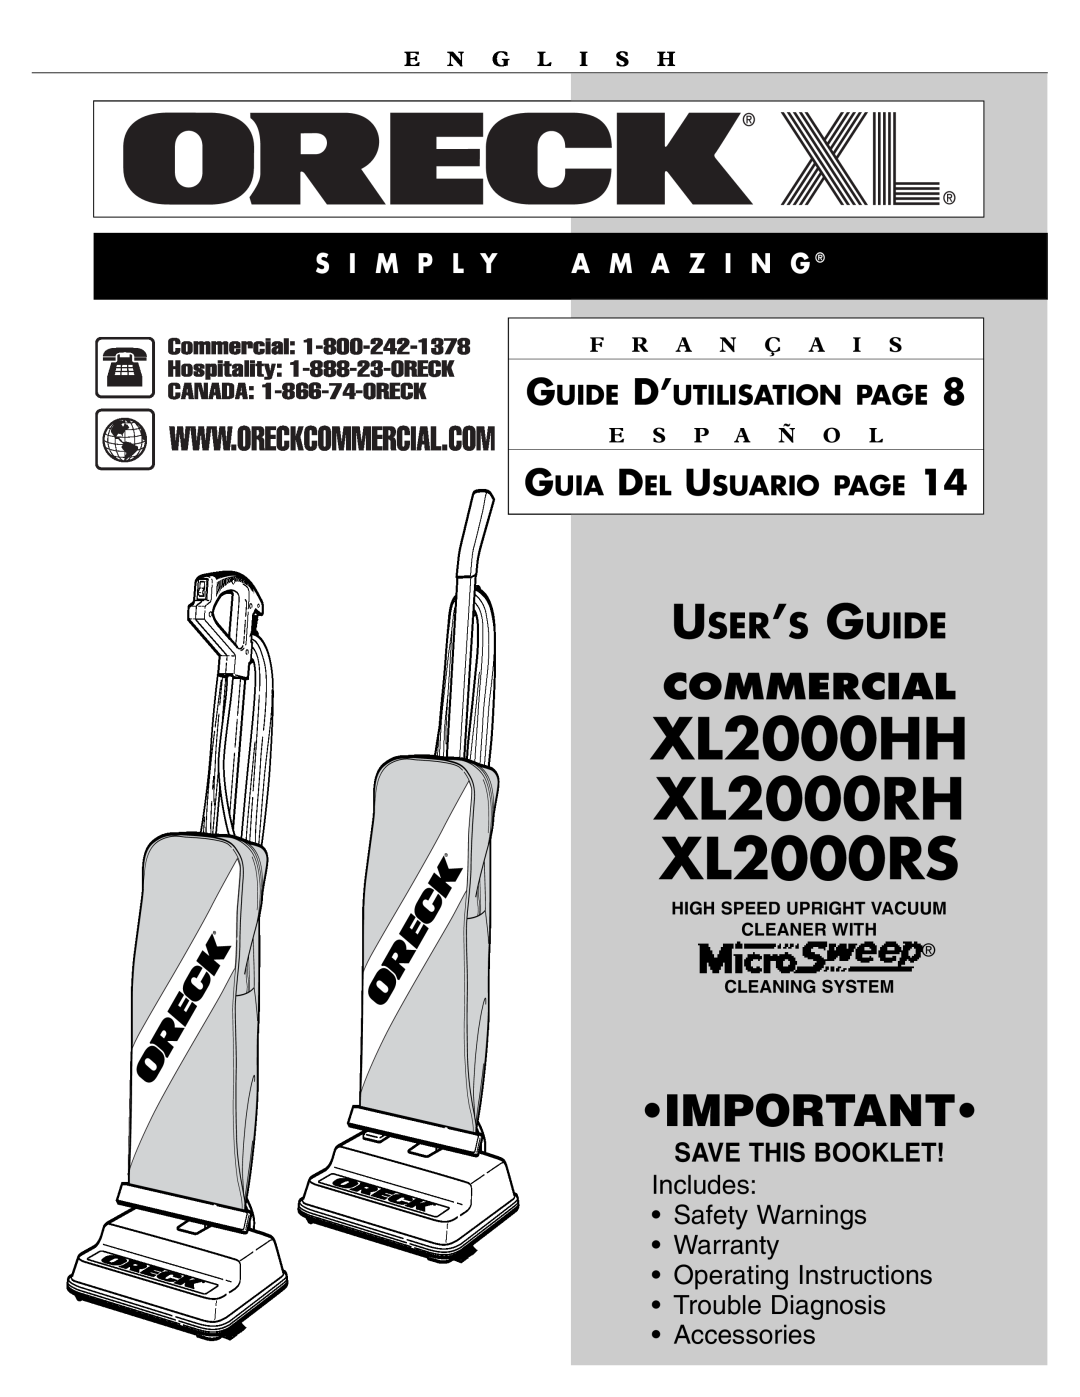 Oreck XL2000RH warranty Commercial, User’S Guide, S I M P L Y, A M A Z I N G, Guide D’Utilisation Page, E N G L I S H 